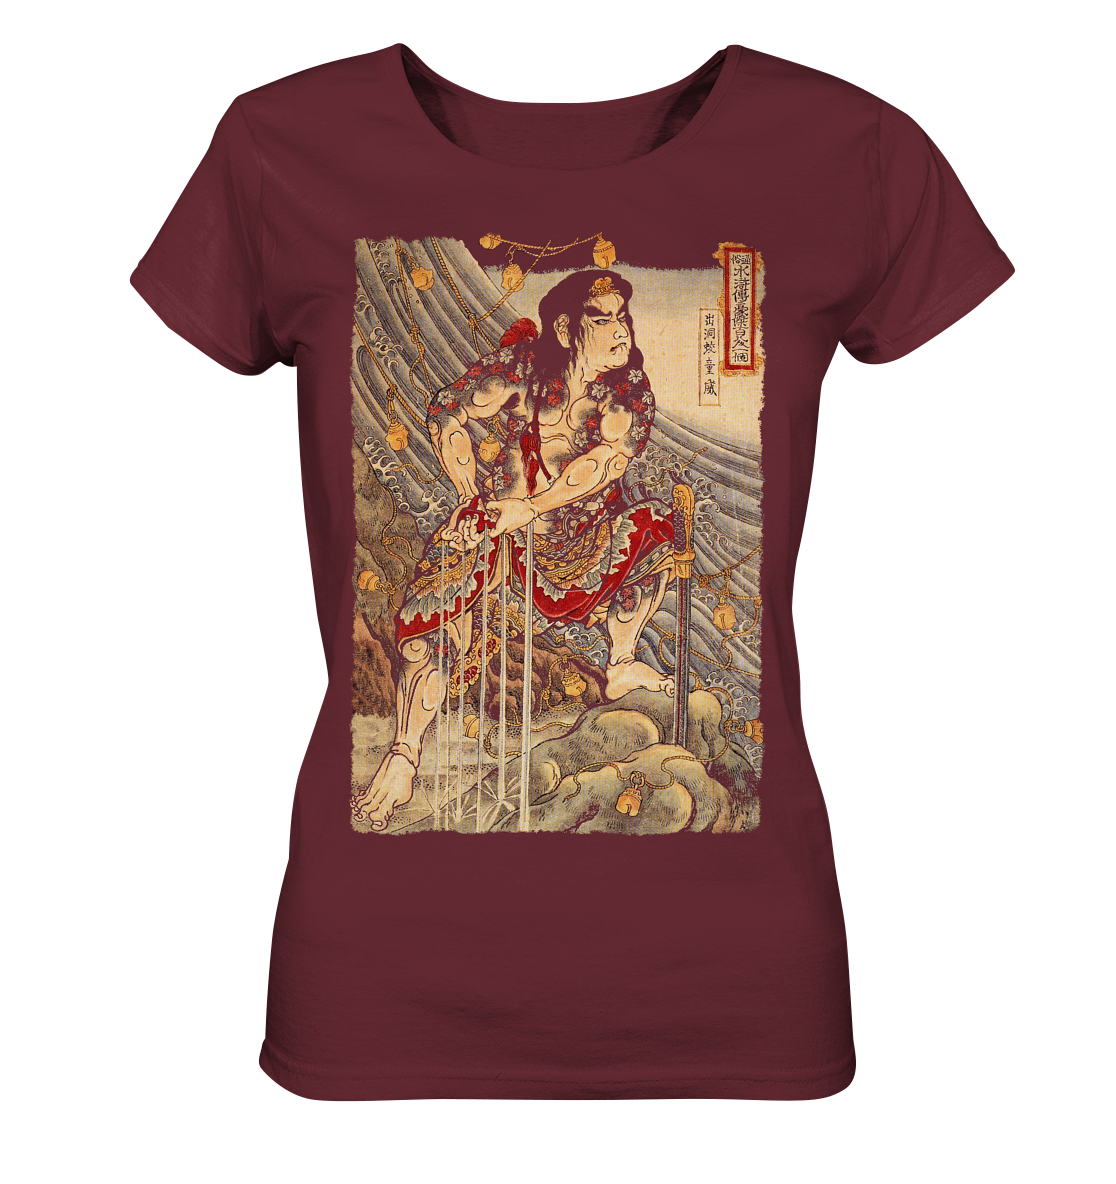 Samurai River - Ladies Organic Shirt